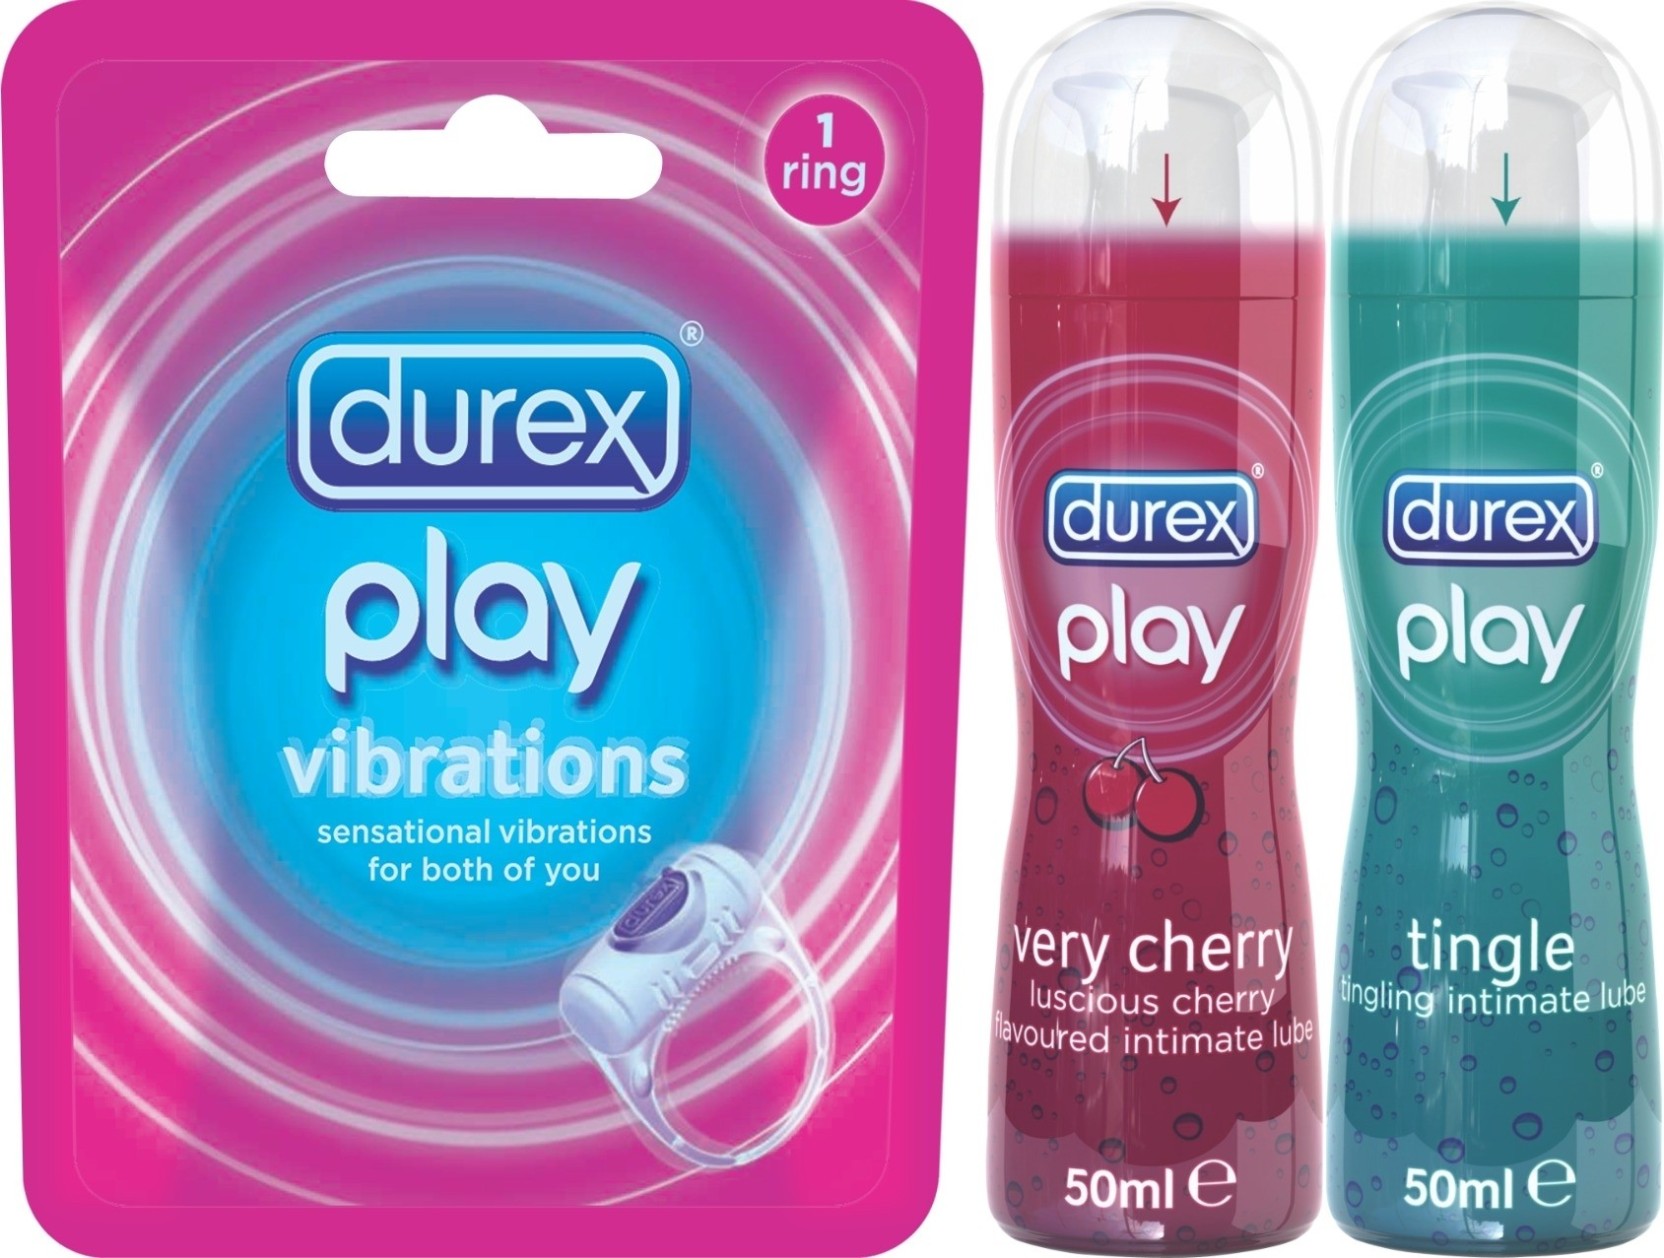 Durex Durex Play Vibrating Ring Vibrations Durex Play Gel Very